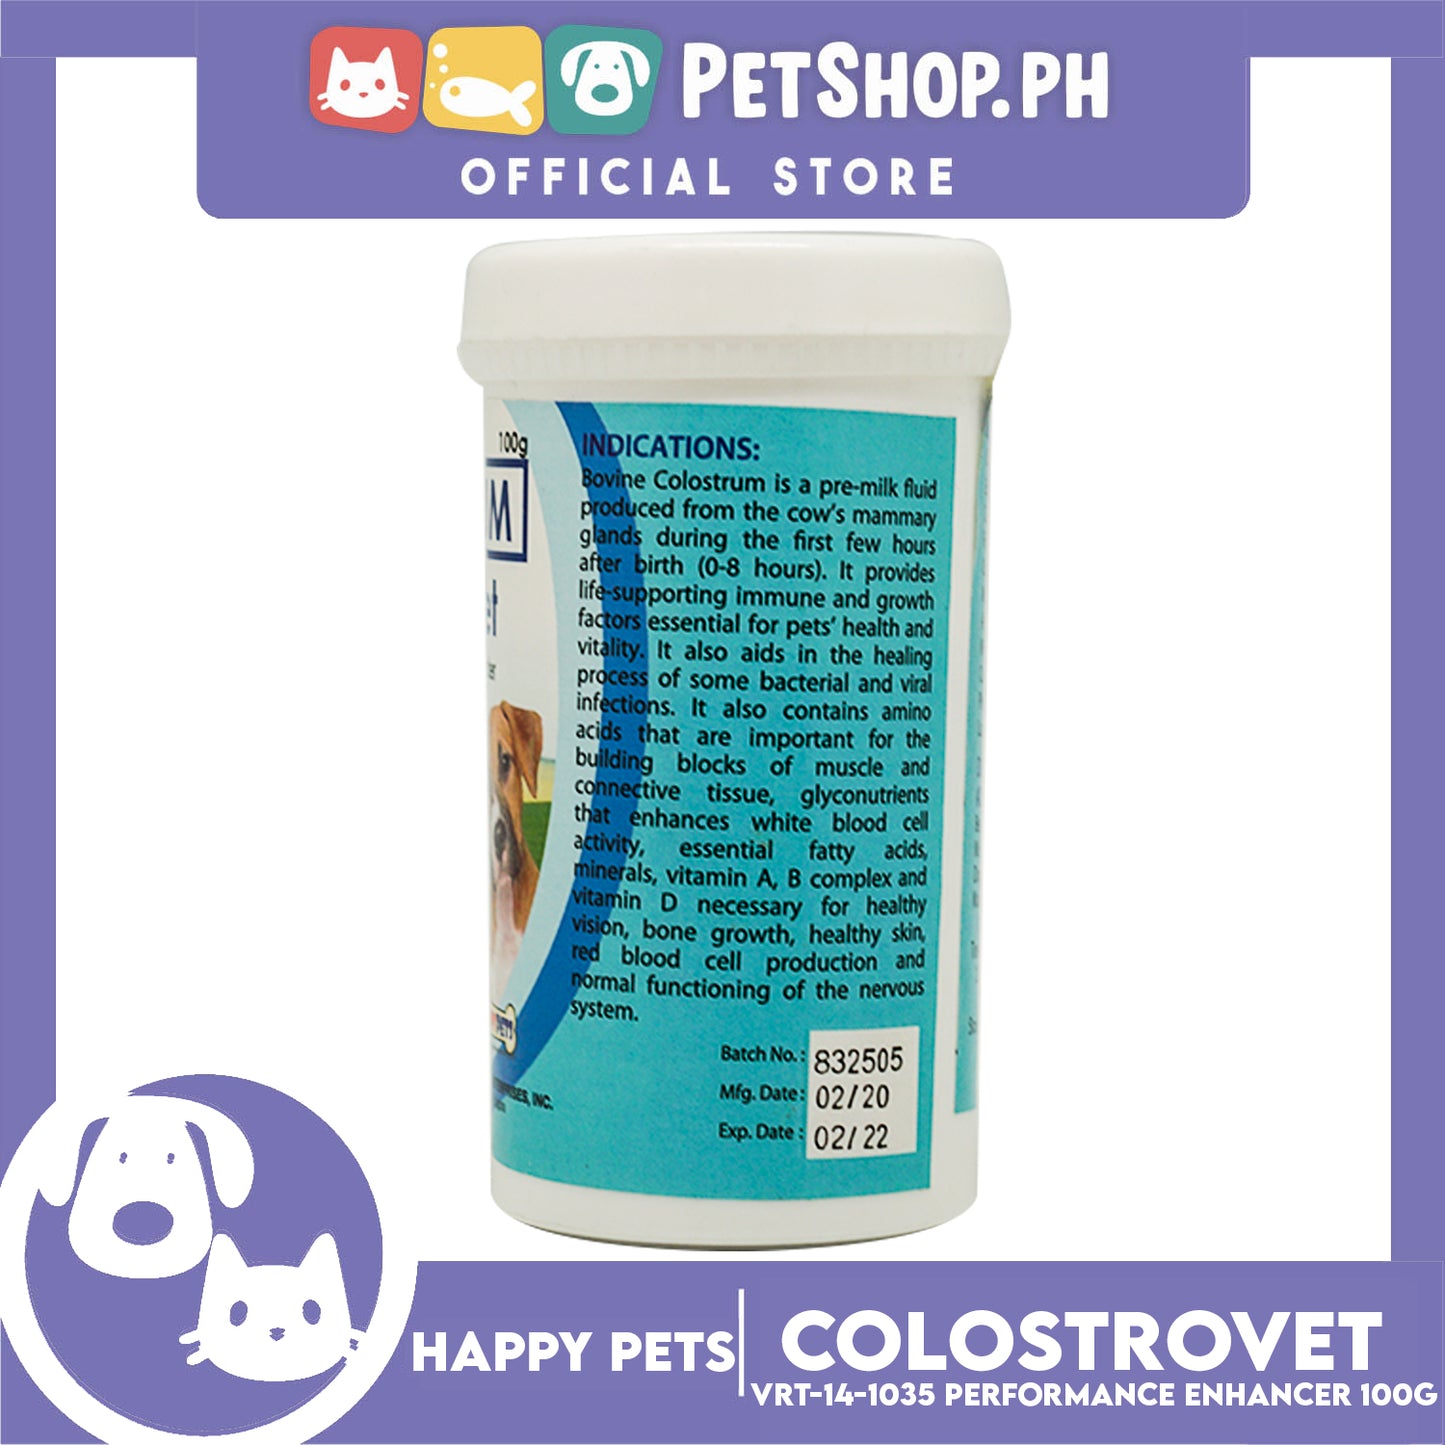 Happy Pets Colostrum Colostrovet VRT-14-1035 Performance Enhancer 100g Pets Immune Booster